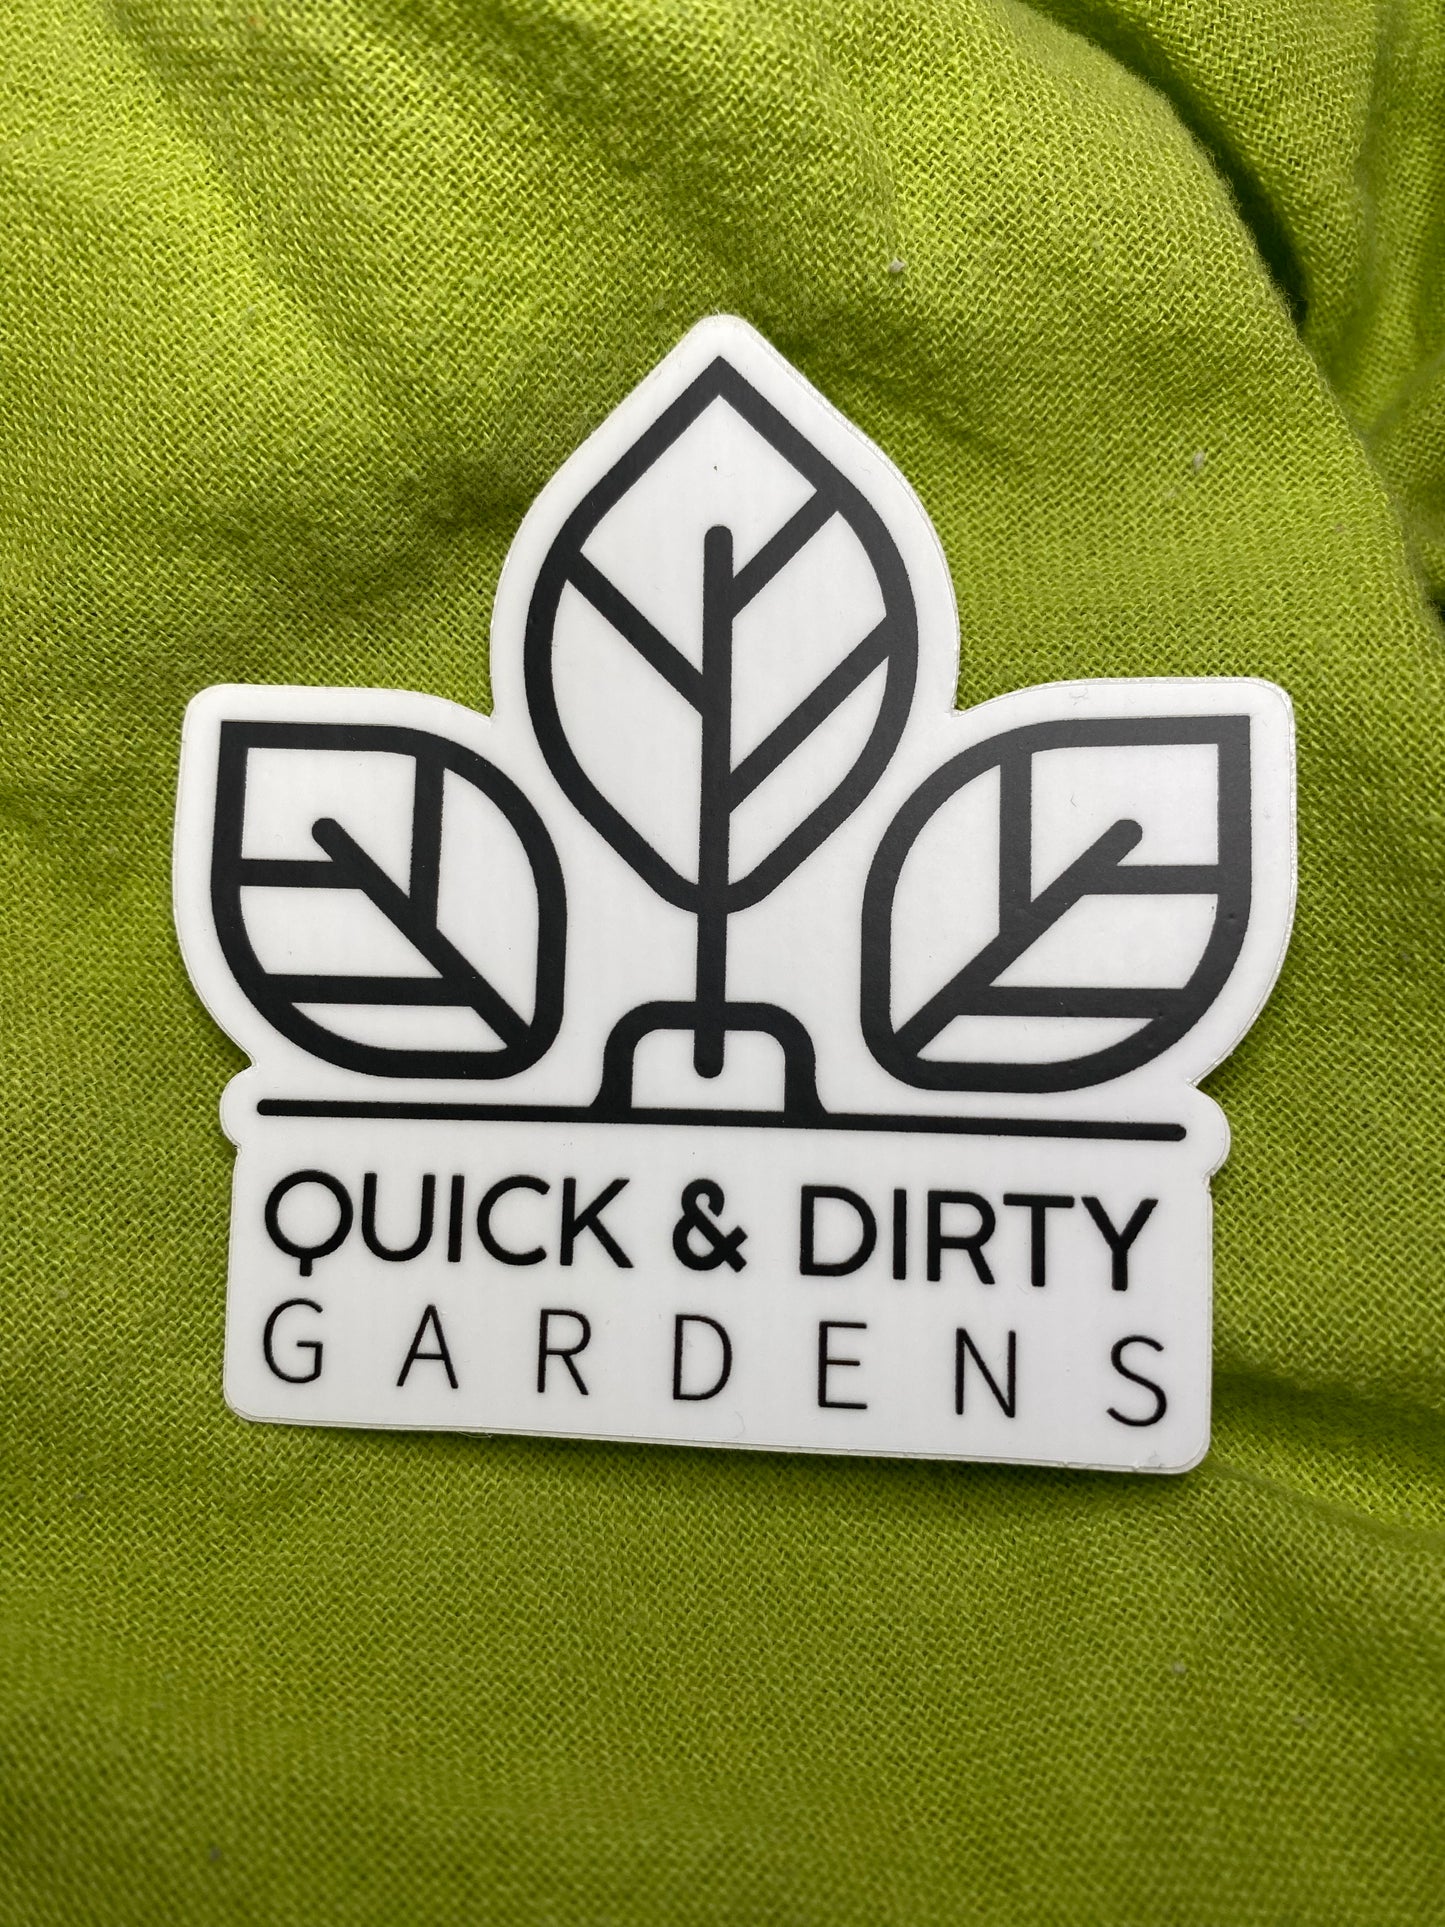 Quickanddirtygardens logo vinyl sticker